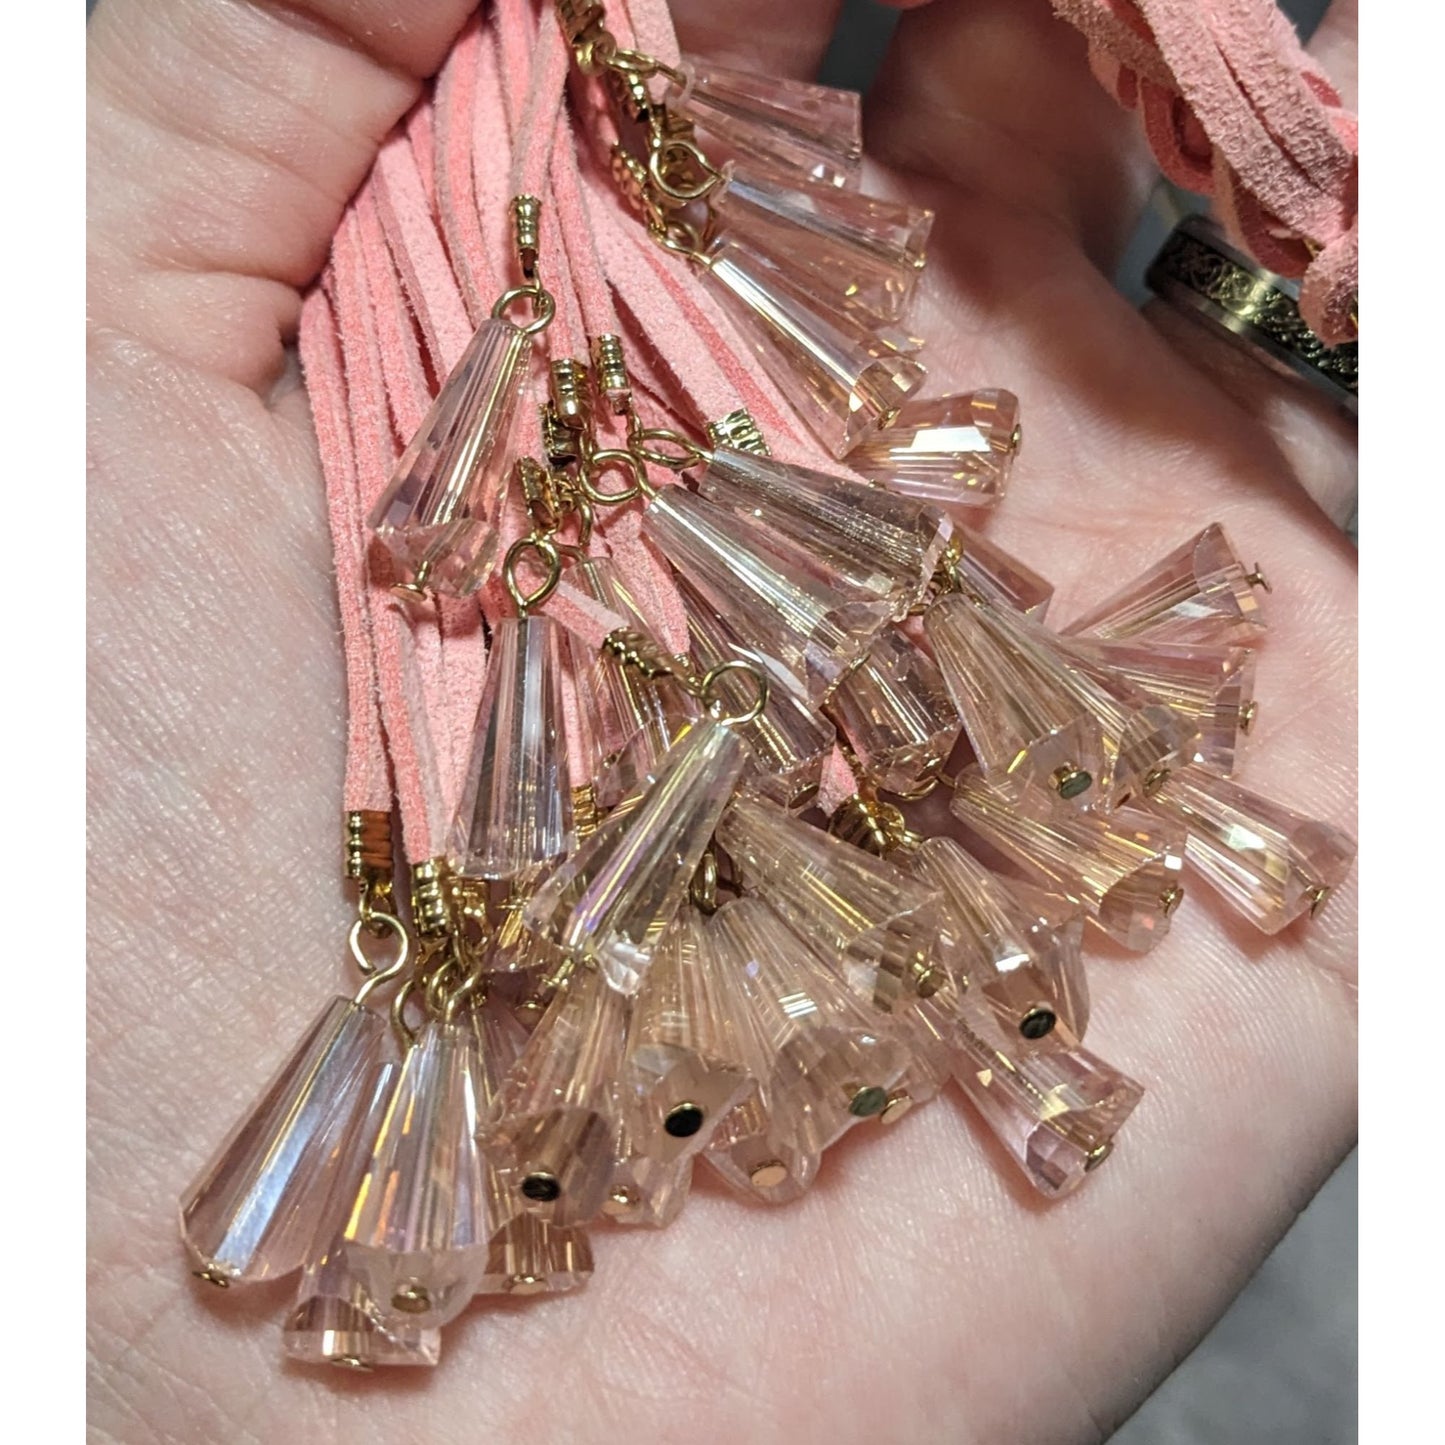 Pink Suede Beaded Fringe Necklace